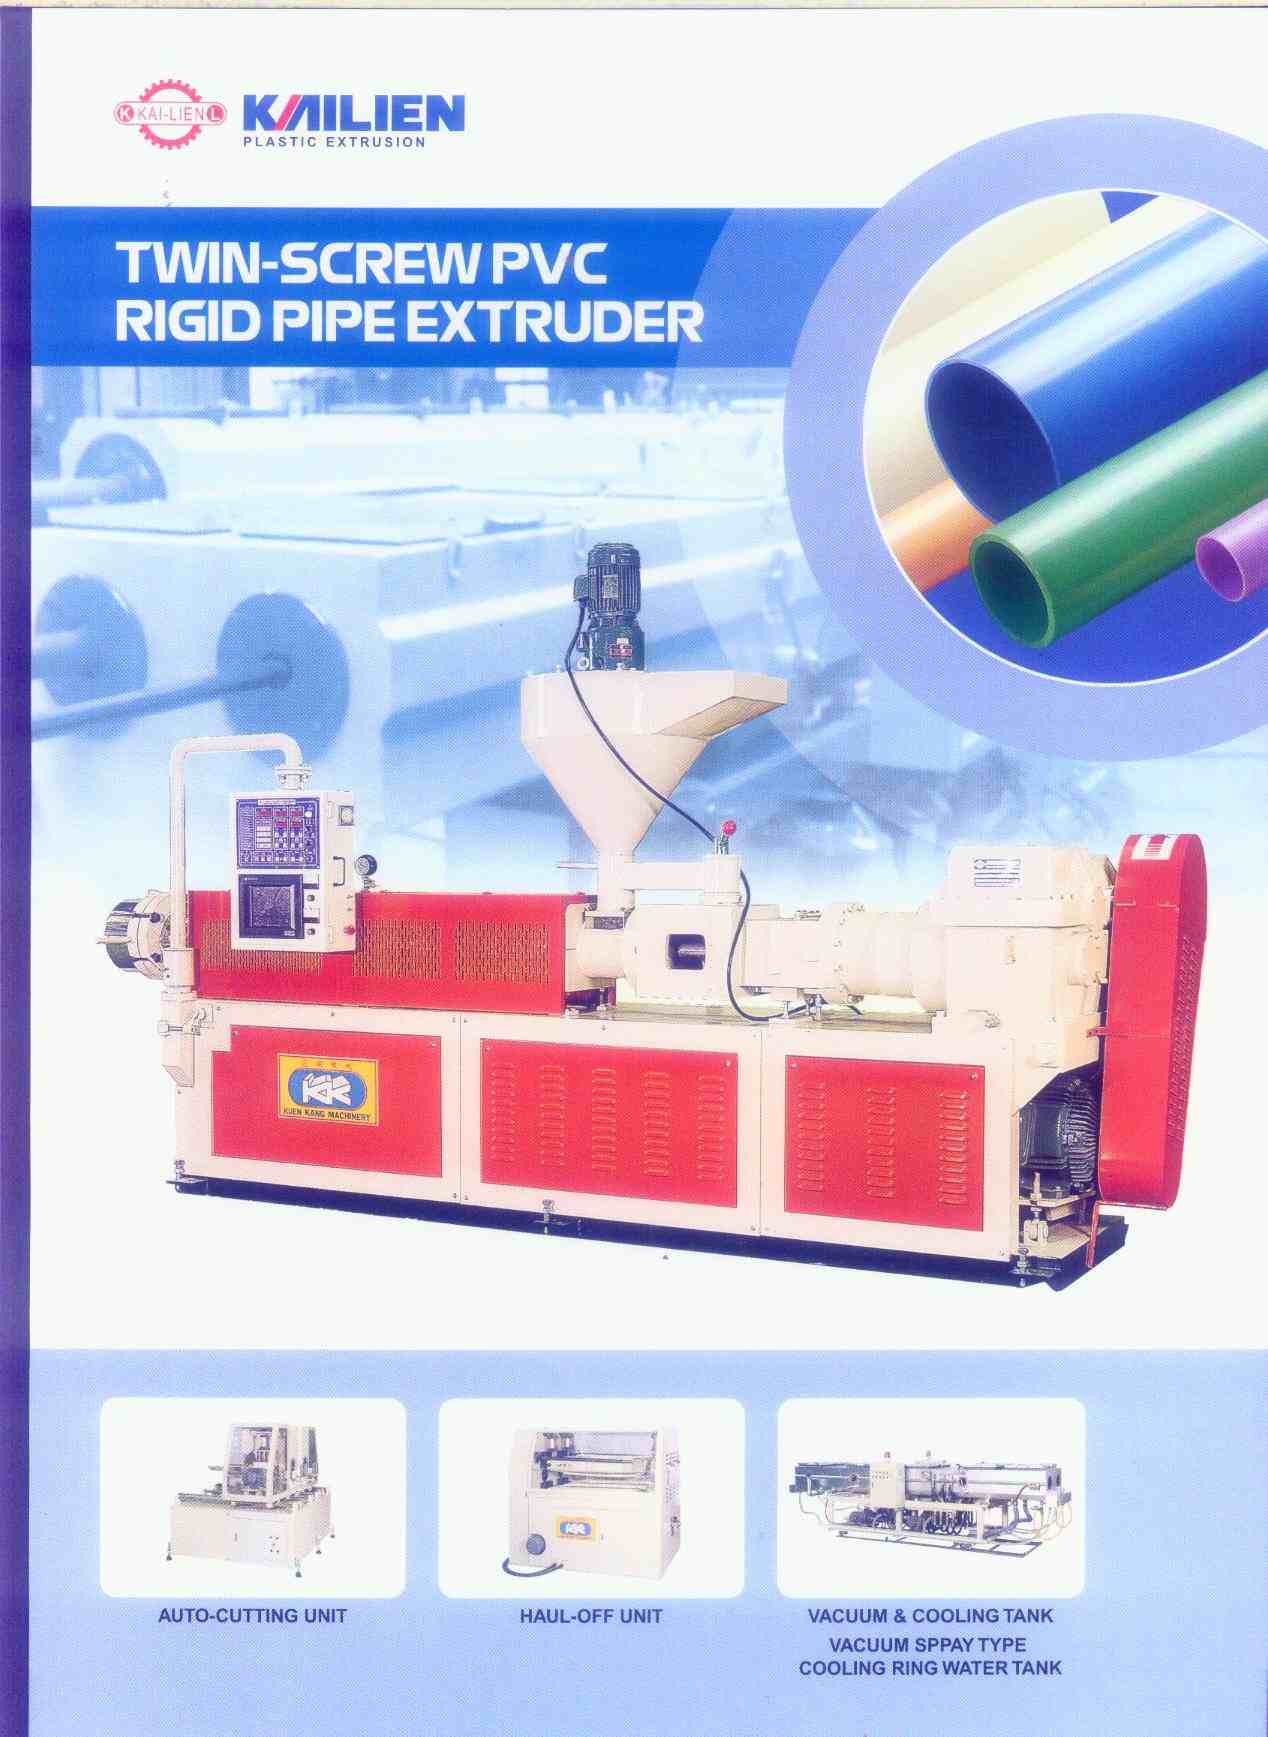 Twin-Screw PVC Rigid Pipe Extrusion Machine